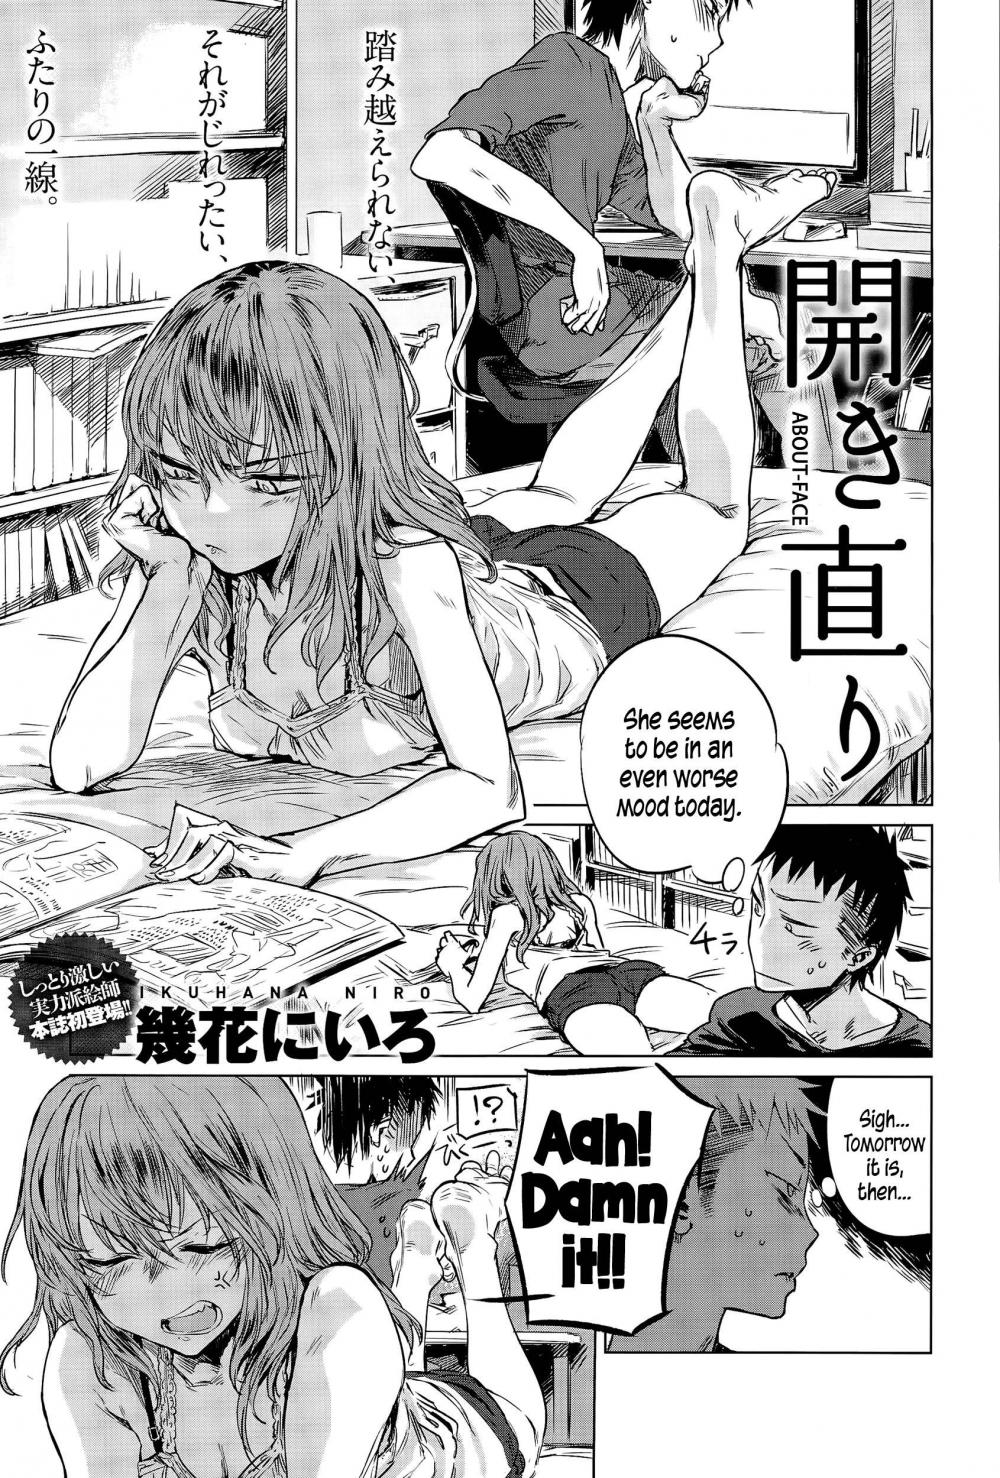 Erotica manga read